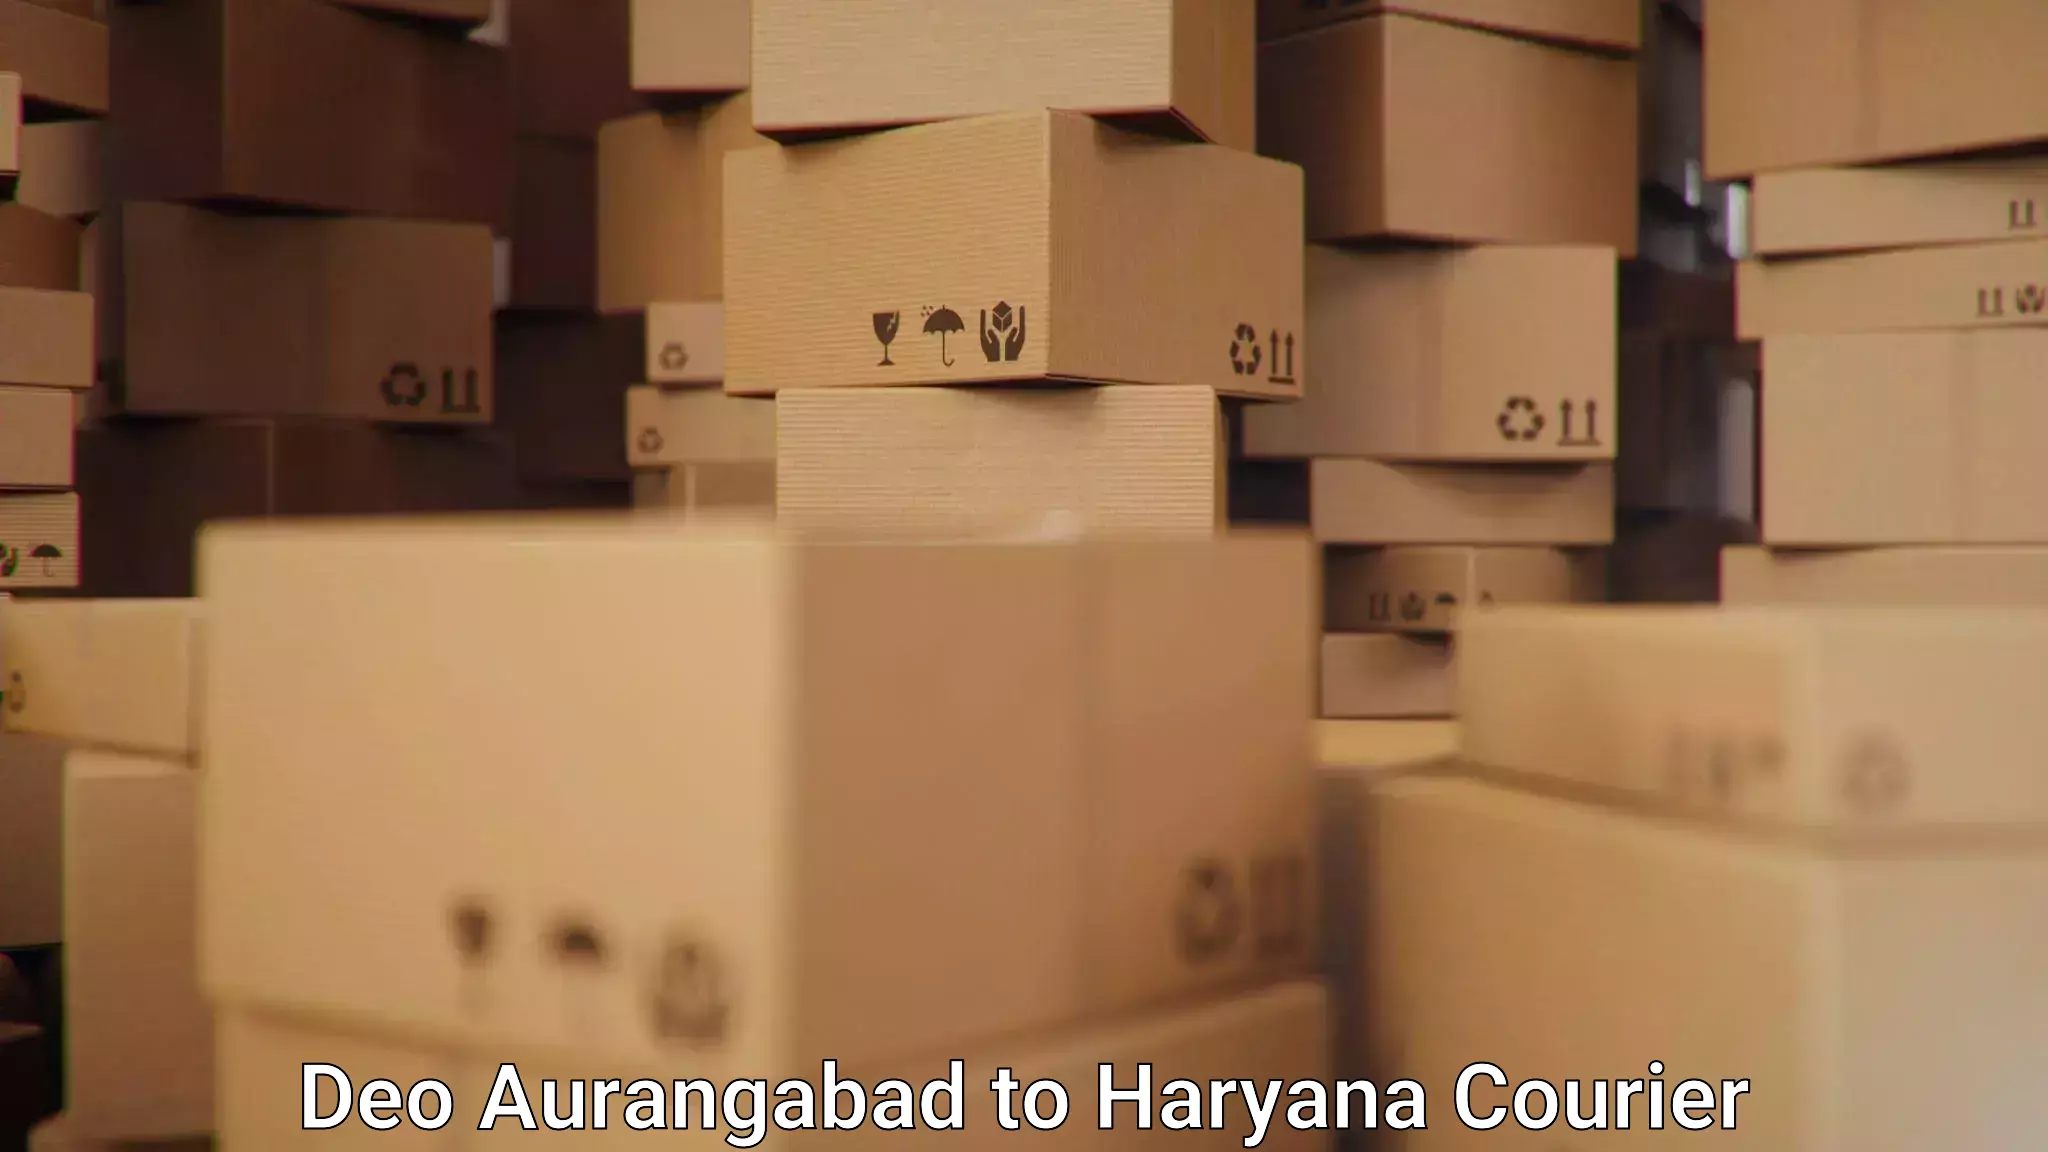 24-hour courier service Deo Aurangabad to Bhuna